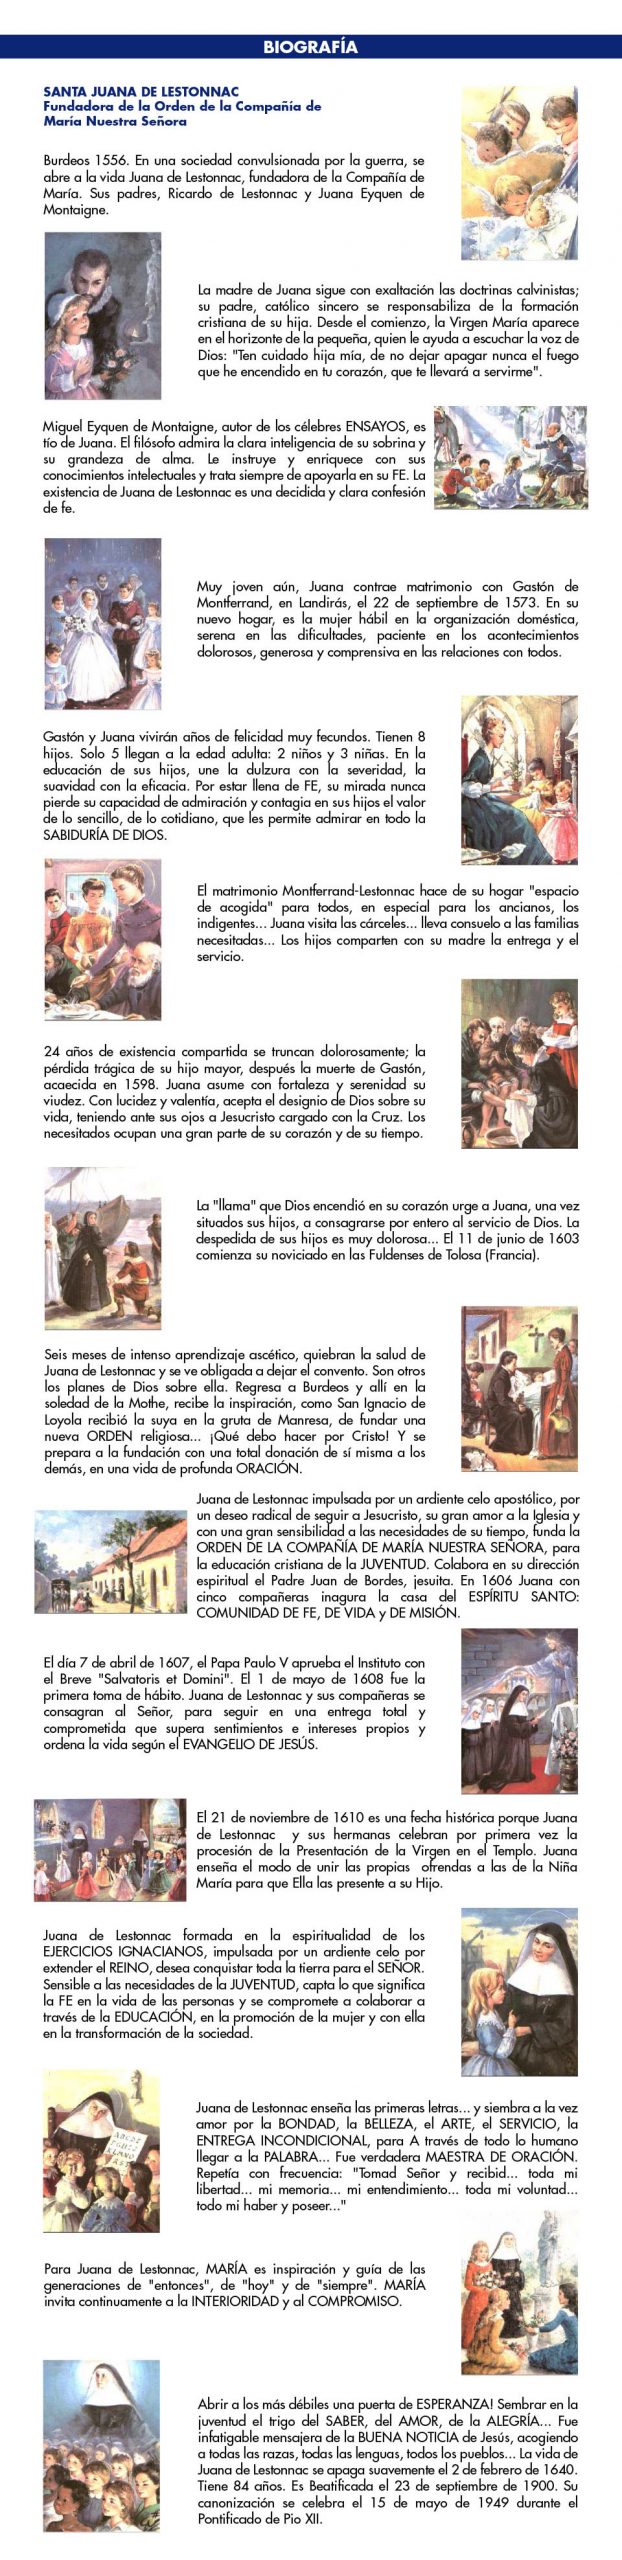 Biografía Santa Juana en dibujos